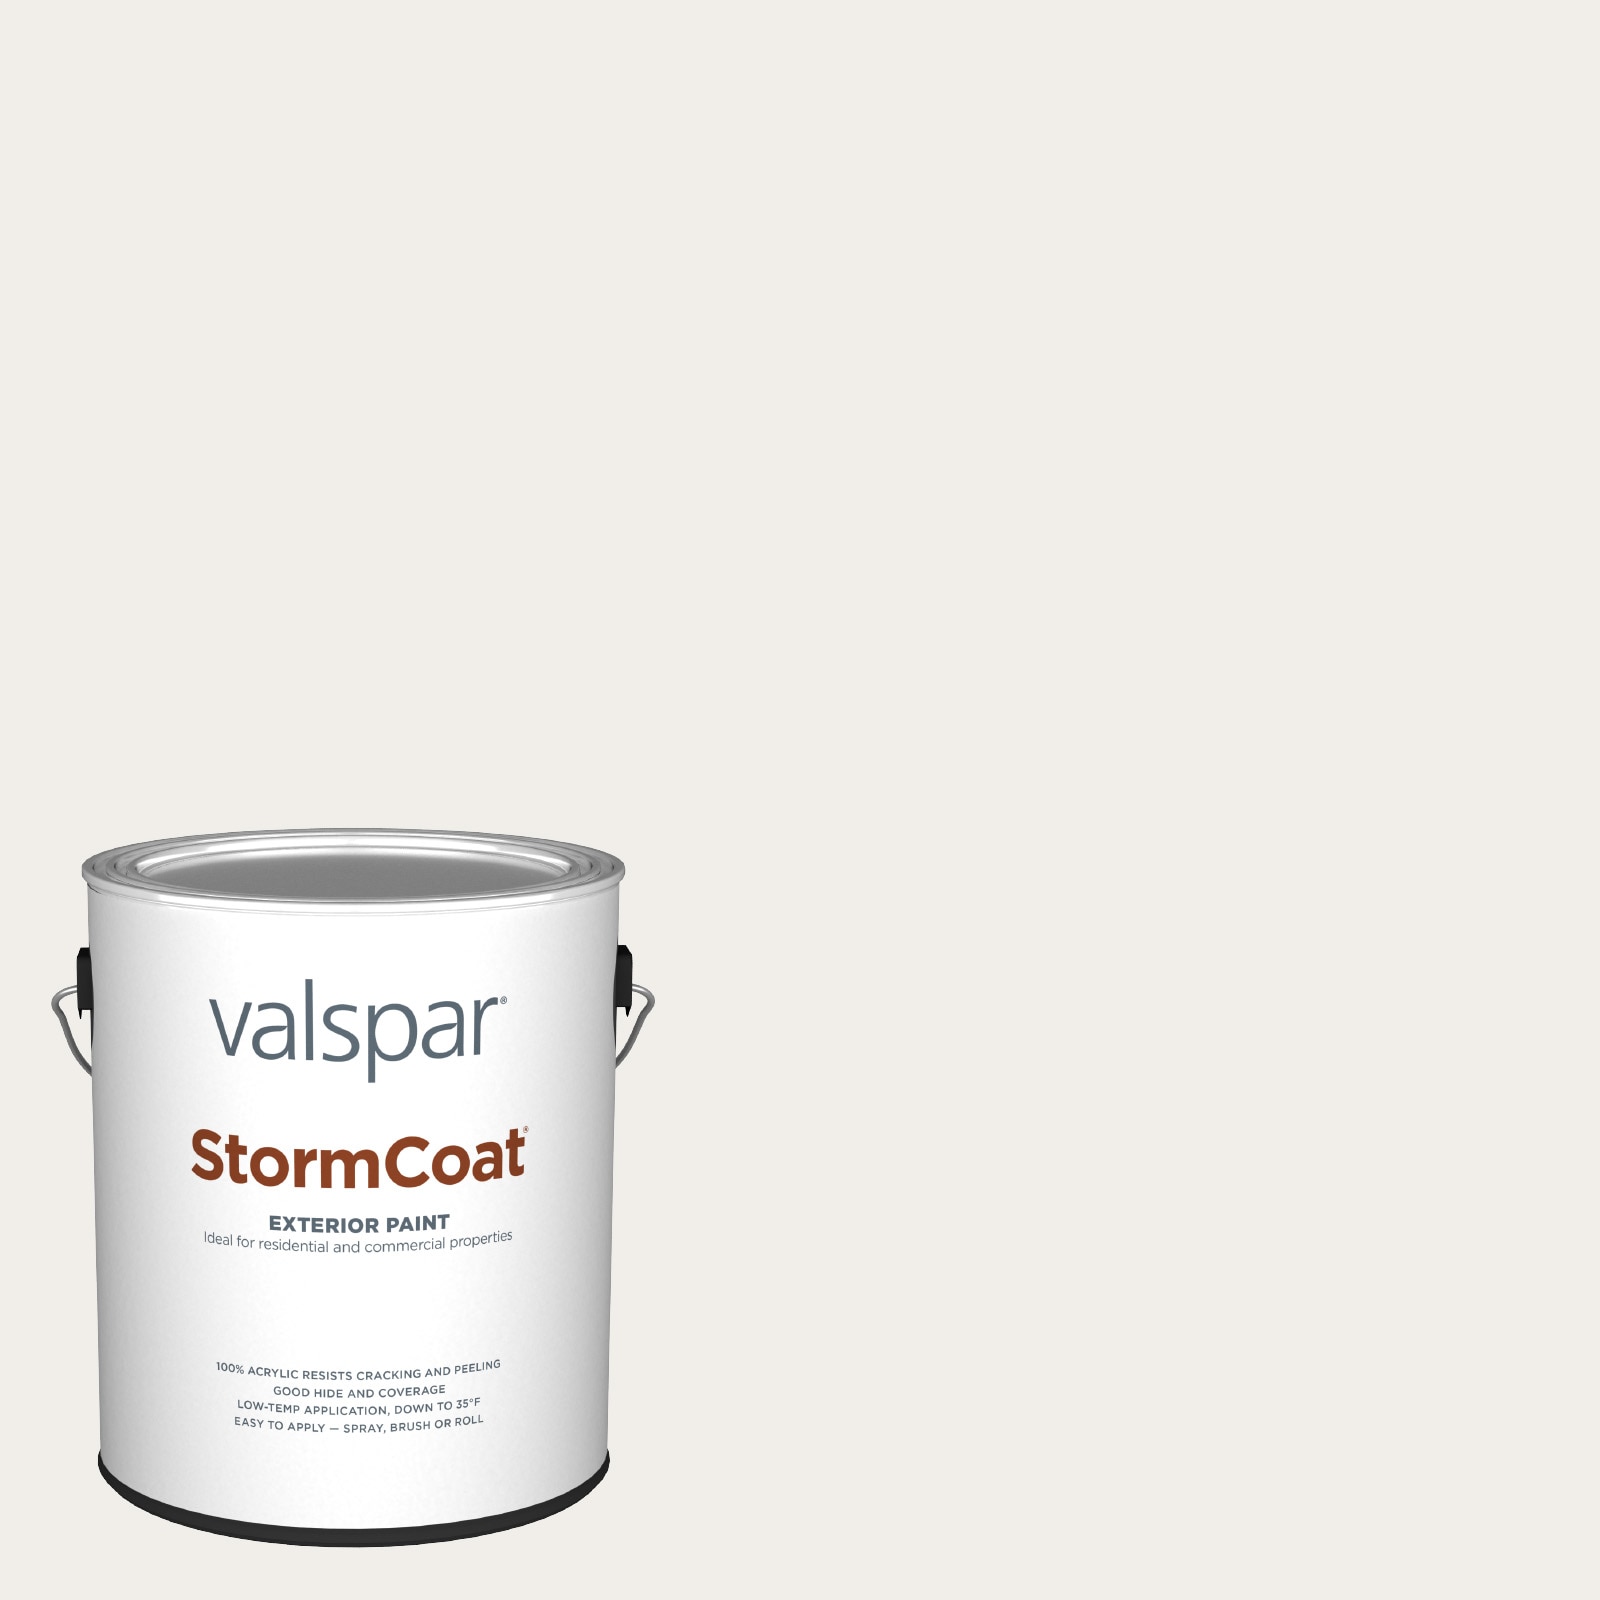 Valspar Pristine 100% Acrylic Paint & Primer Matte Interior Wall Paint,  Clear Base, 1 Gal. 